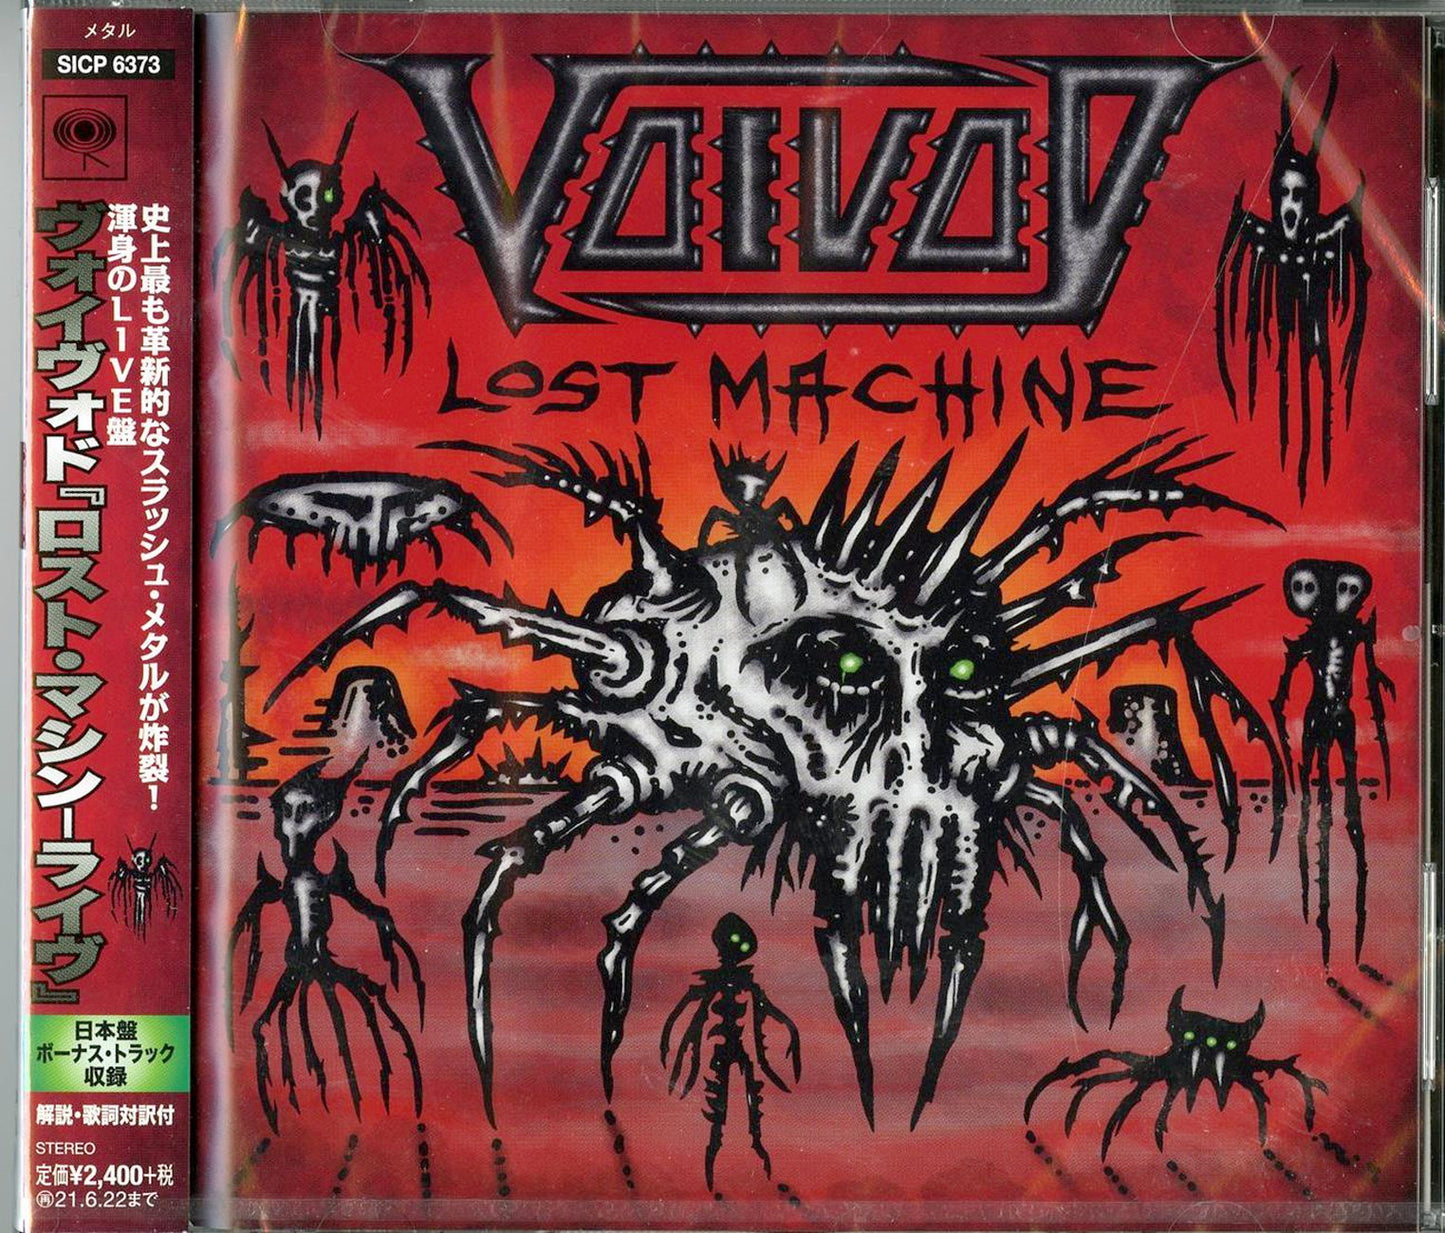 Voivod - Lost Machine - Japan  CD Bonus Track